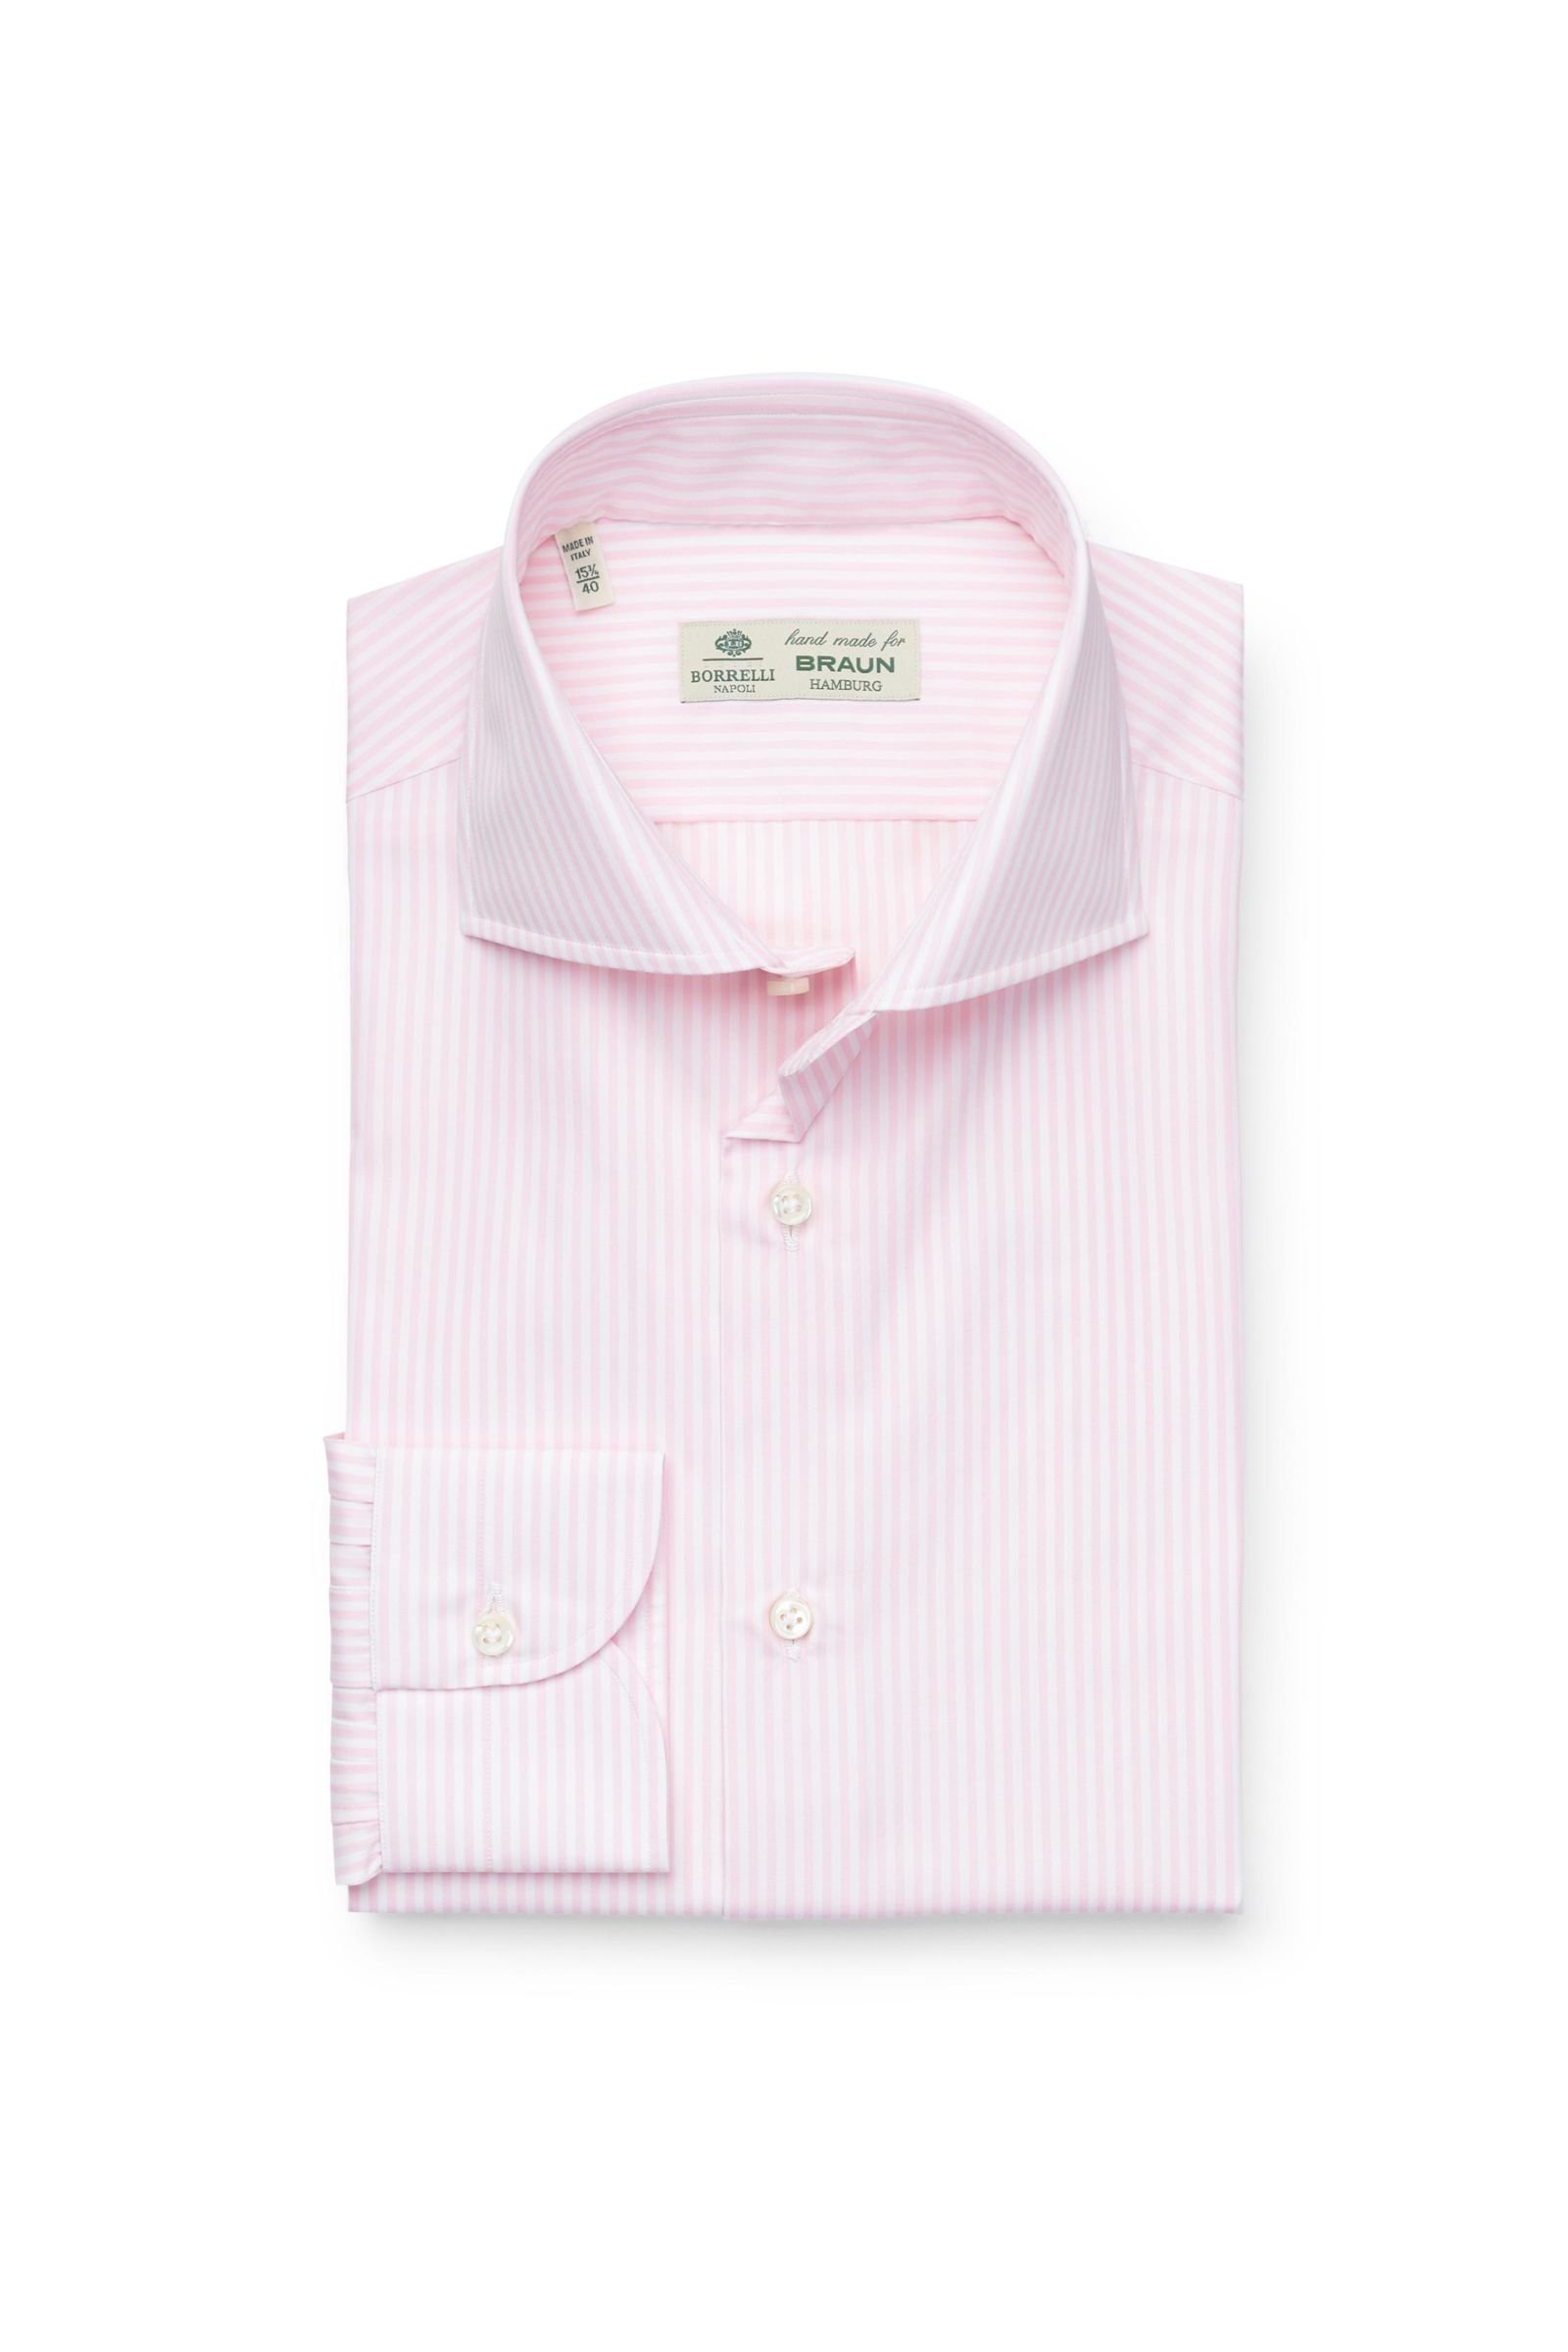 Business shirt 'Nando' shark collar pink/white striped